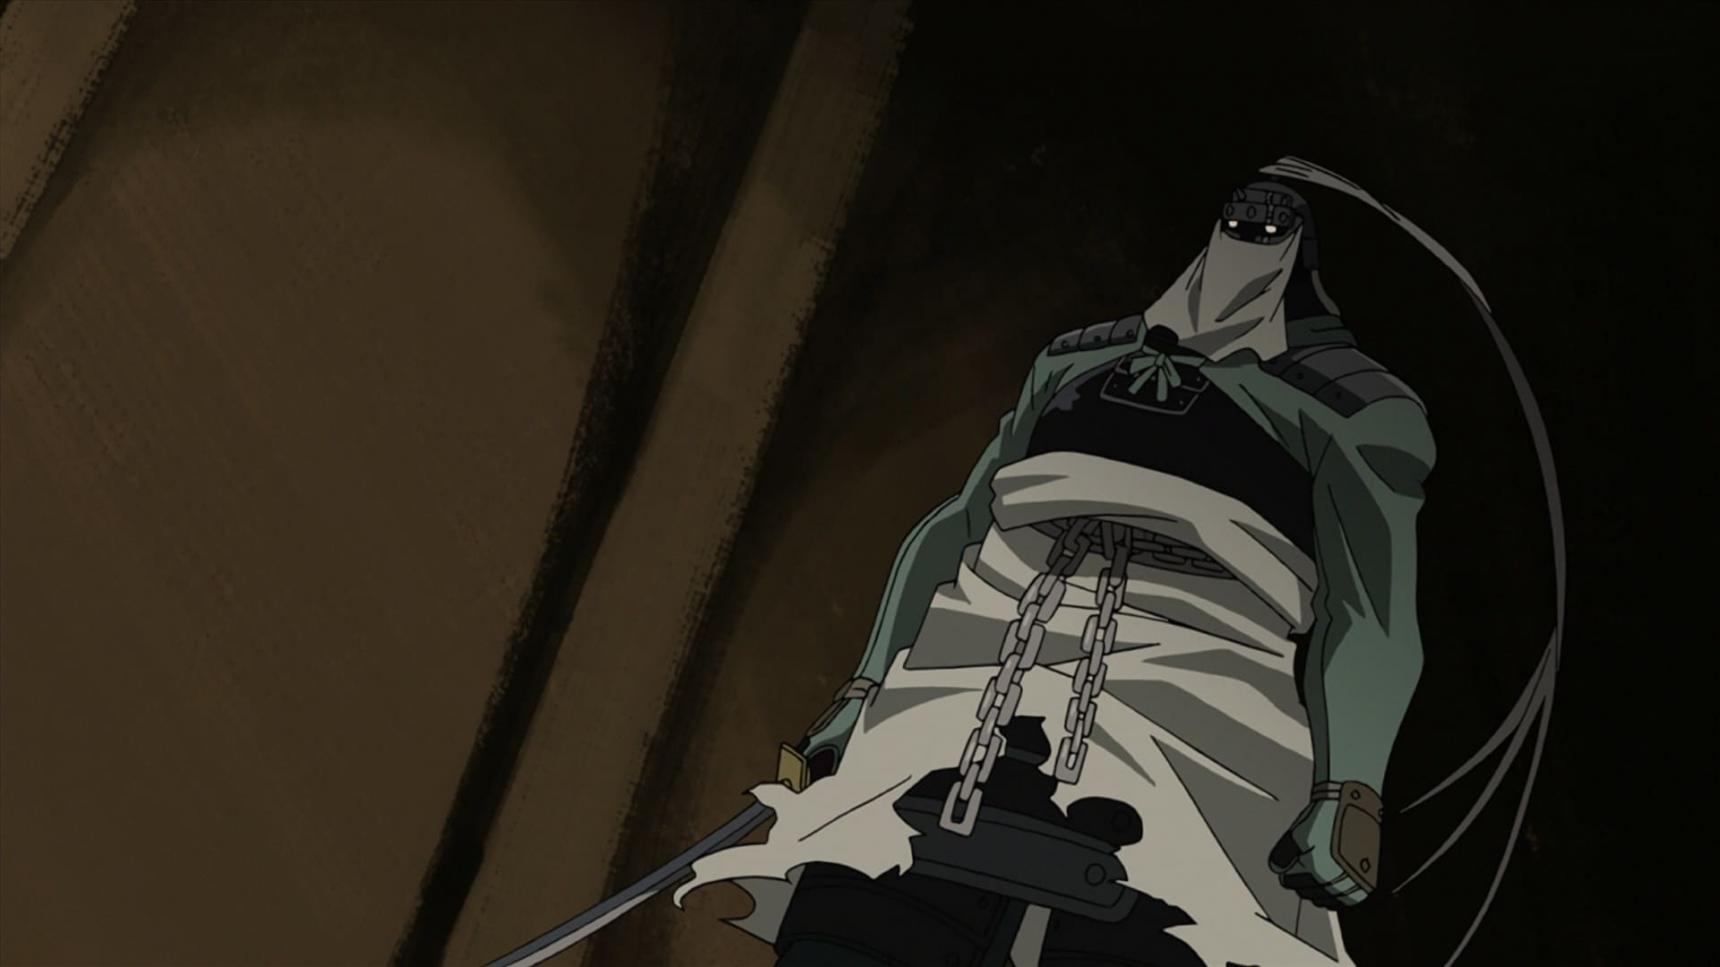 Poster del episodio 8 de Fullmetal Alchemist: Brotherhood online